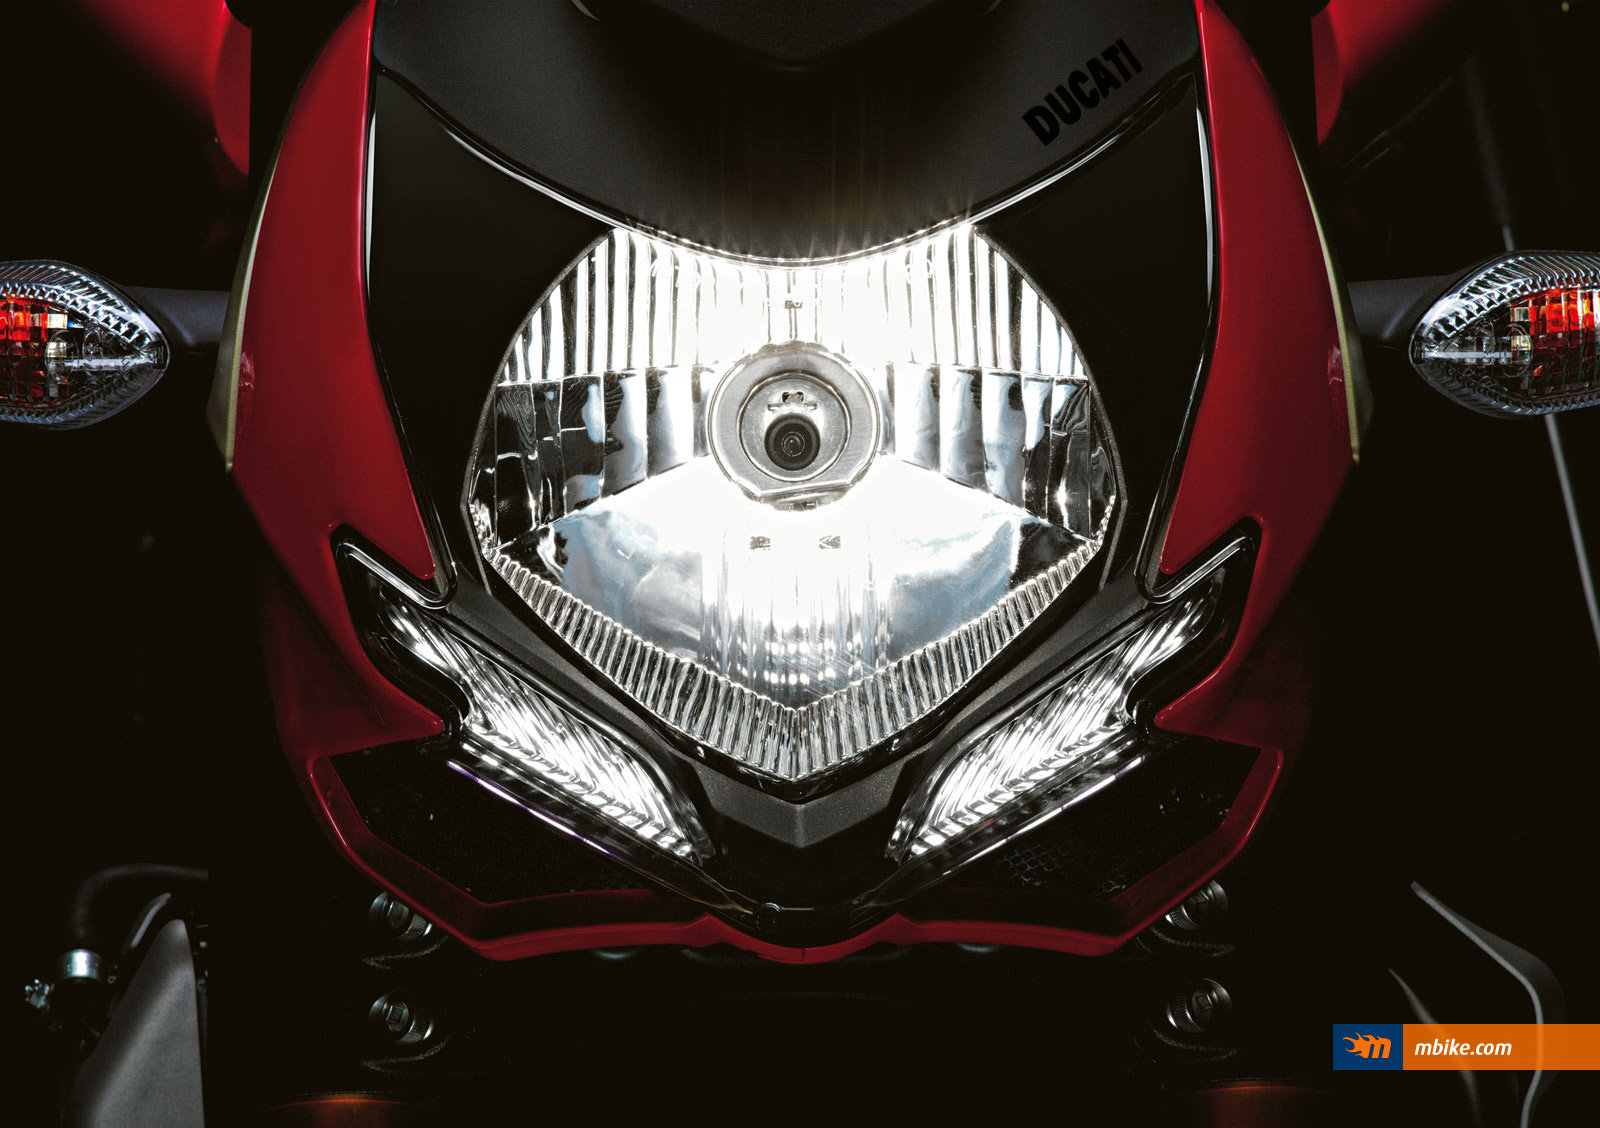 2009 Ducati Streetfighter